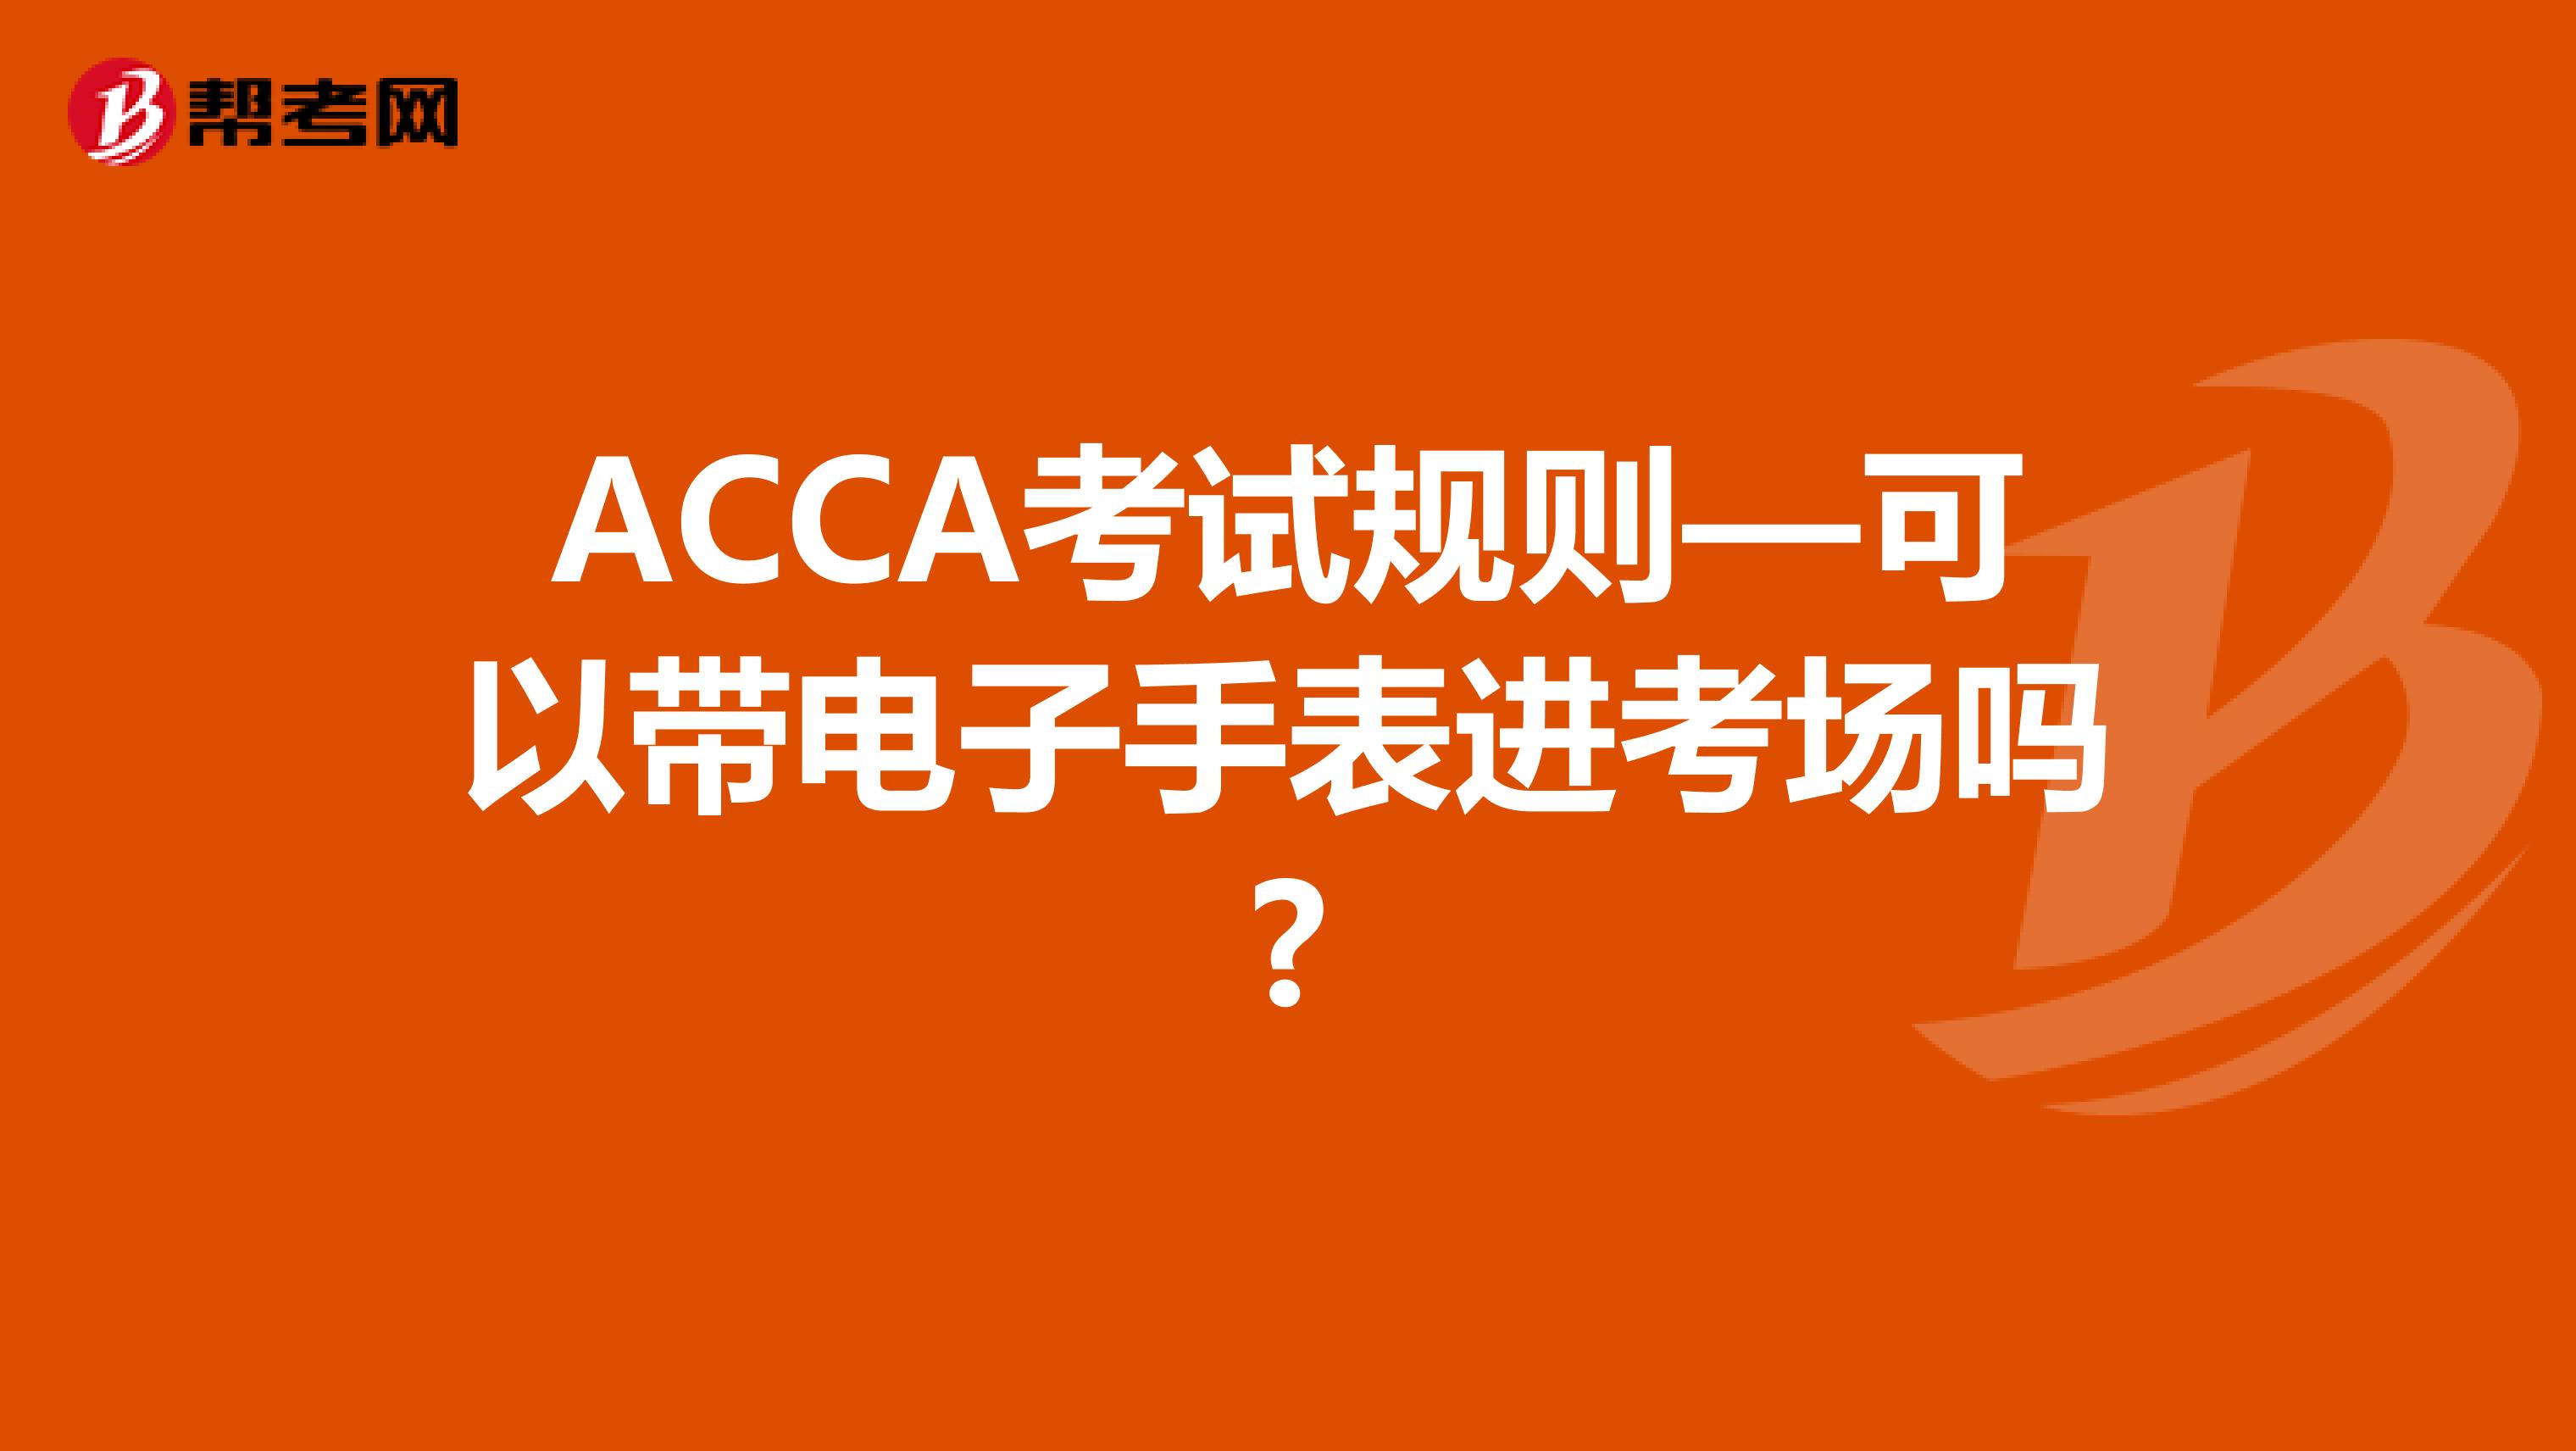 ACCA考试规则—可以带电子手表进考场吗?